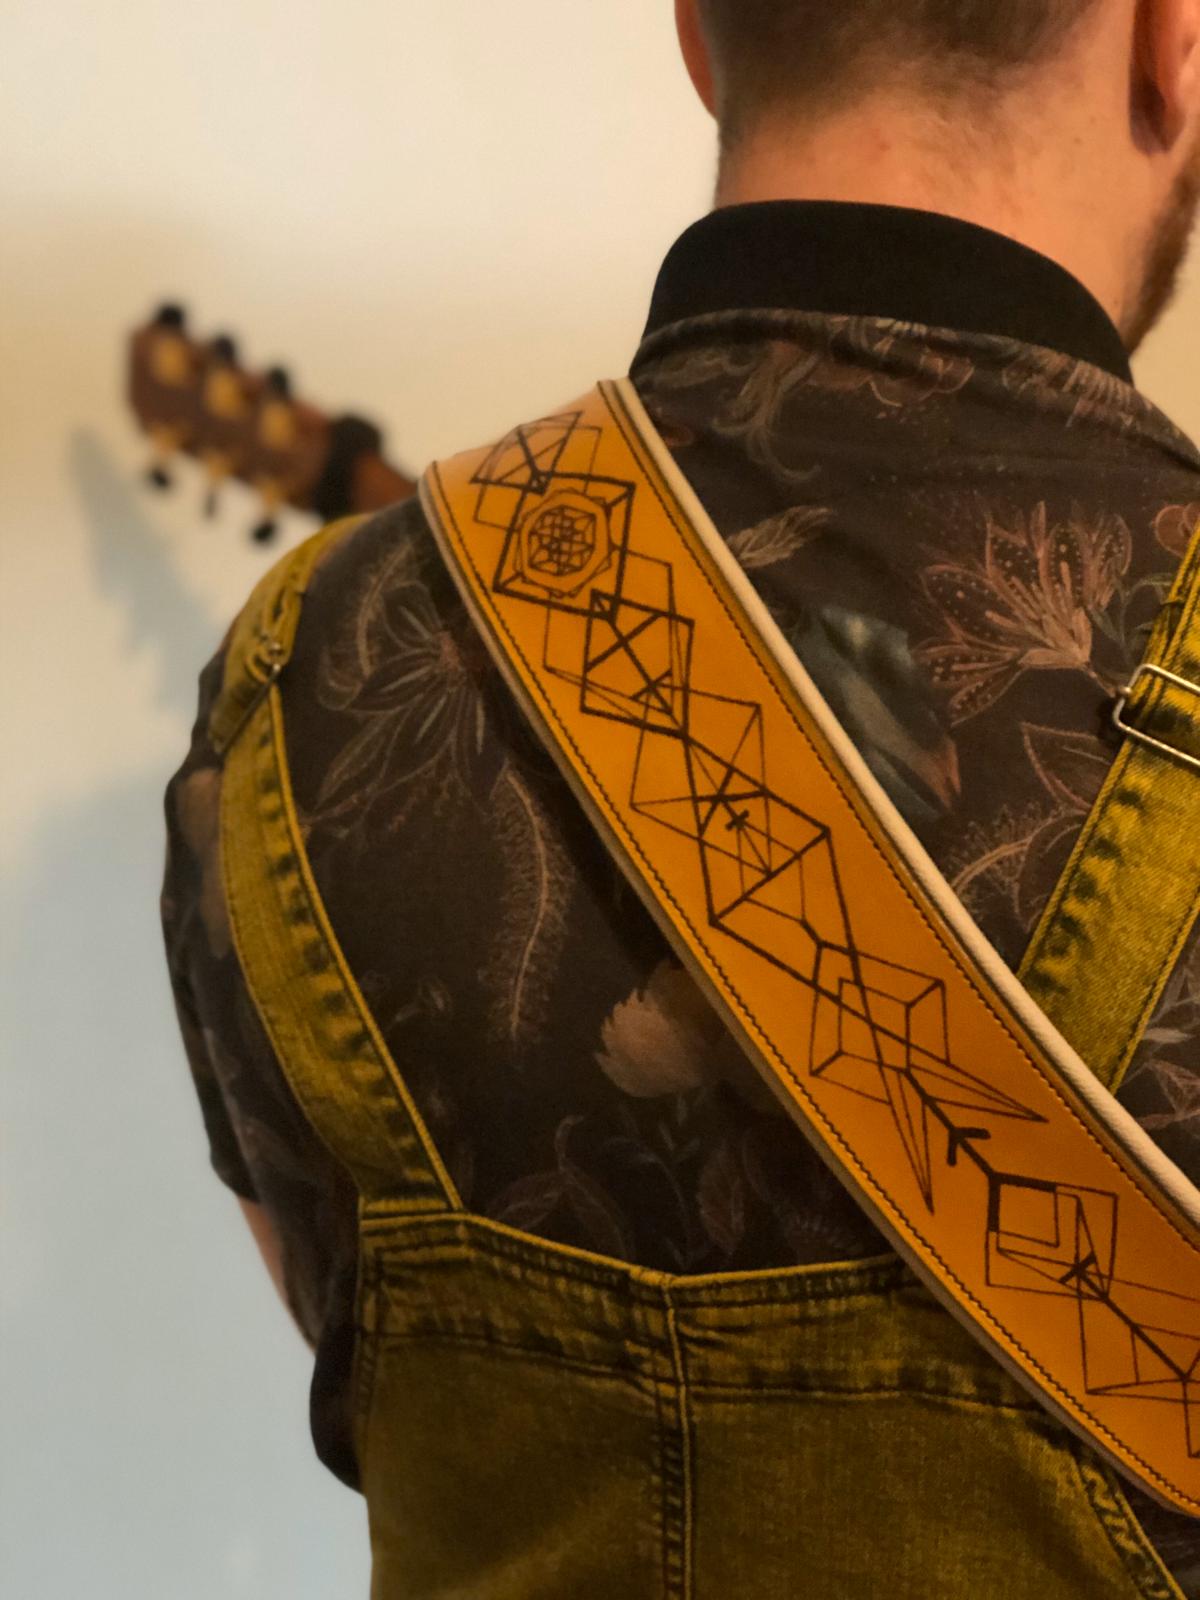 Custom made guitar strap for intentionally renowned guitarist Samiwel Humphreys